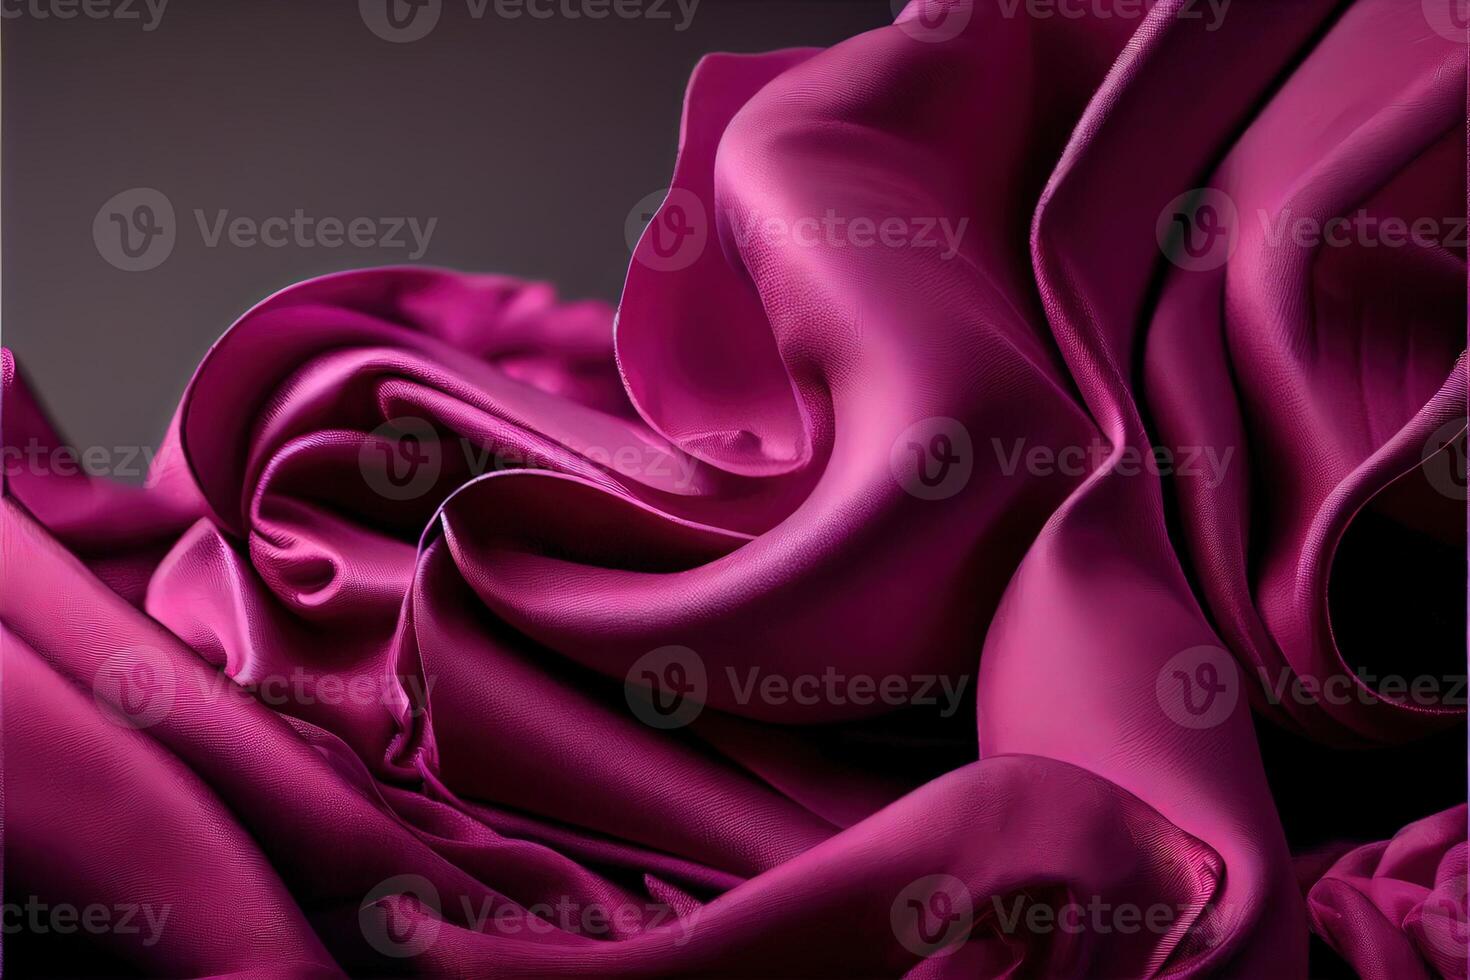 illustration of soft magenta, pink fabric photo